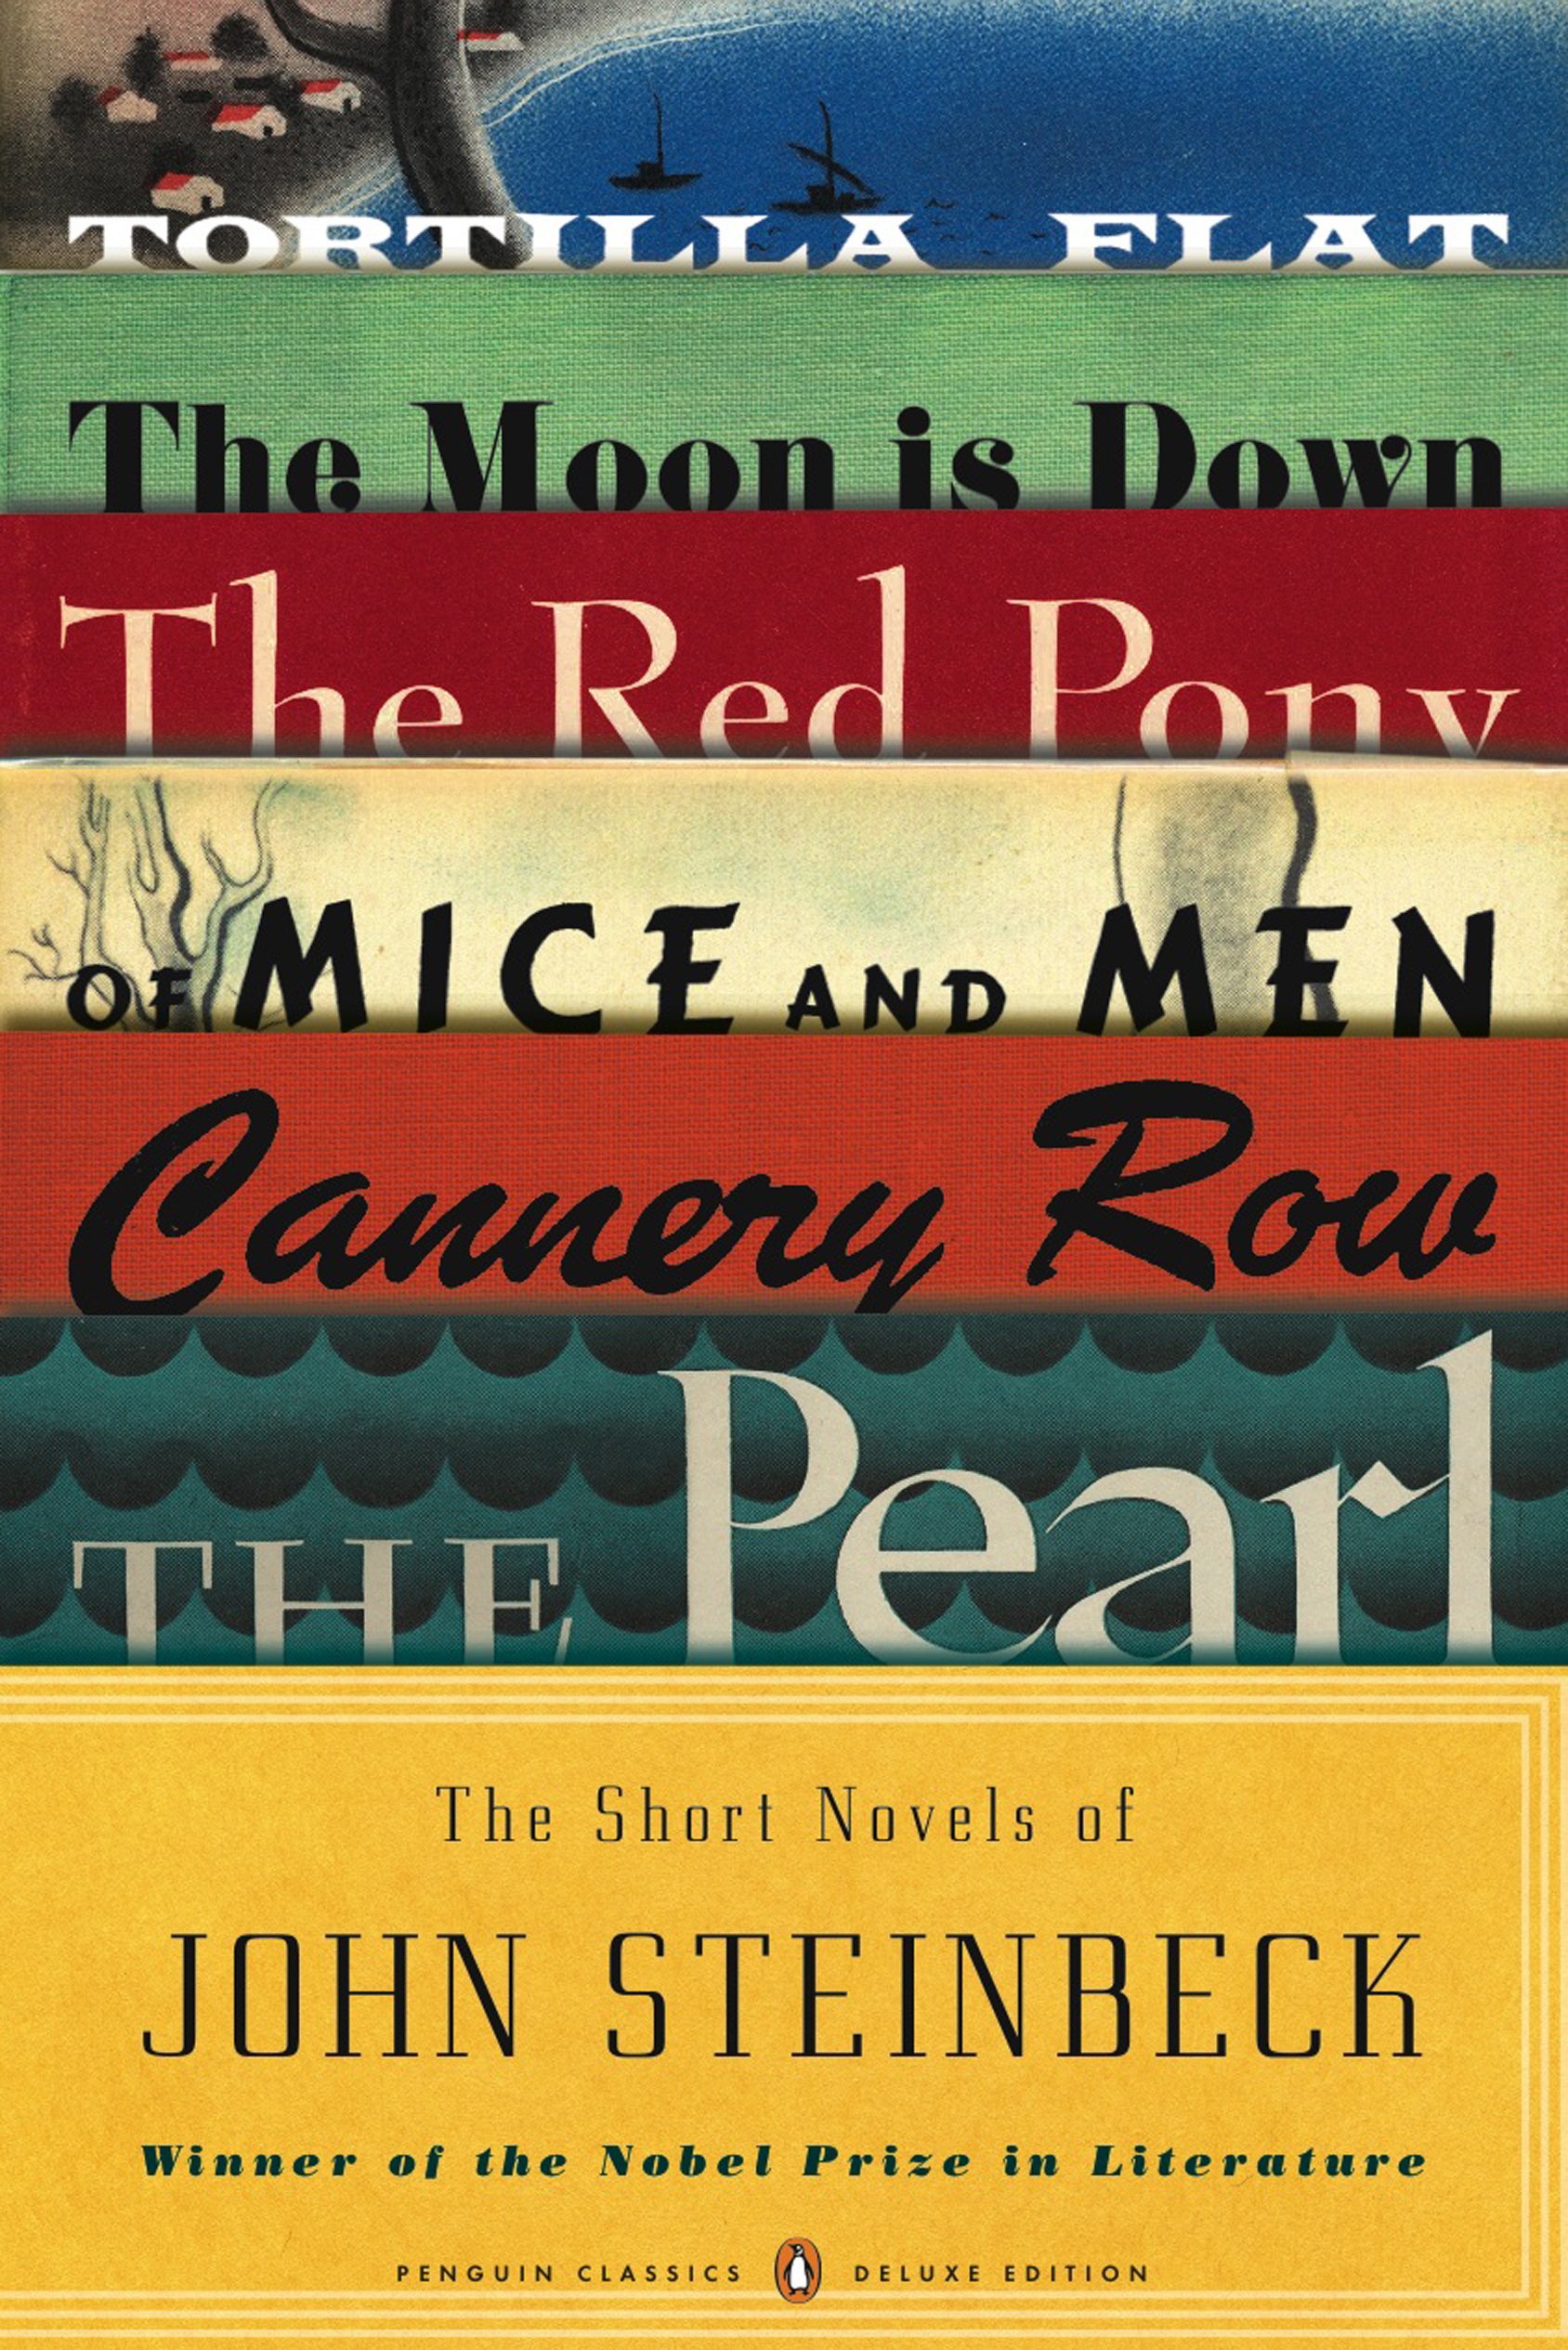 The Short Novels of John Steinbeck: (Penguin Classics Deluxe Edition) (eBook) by John Steinbeck $1.99